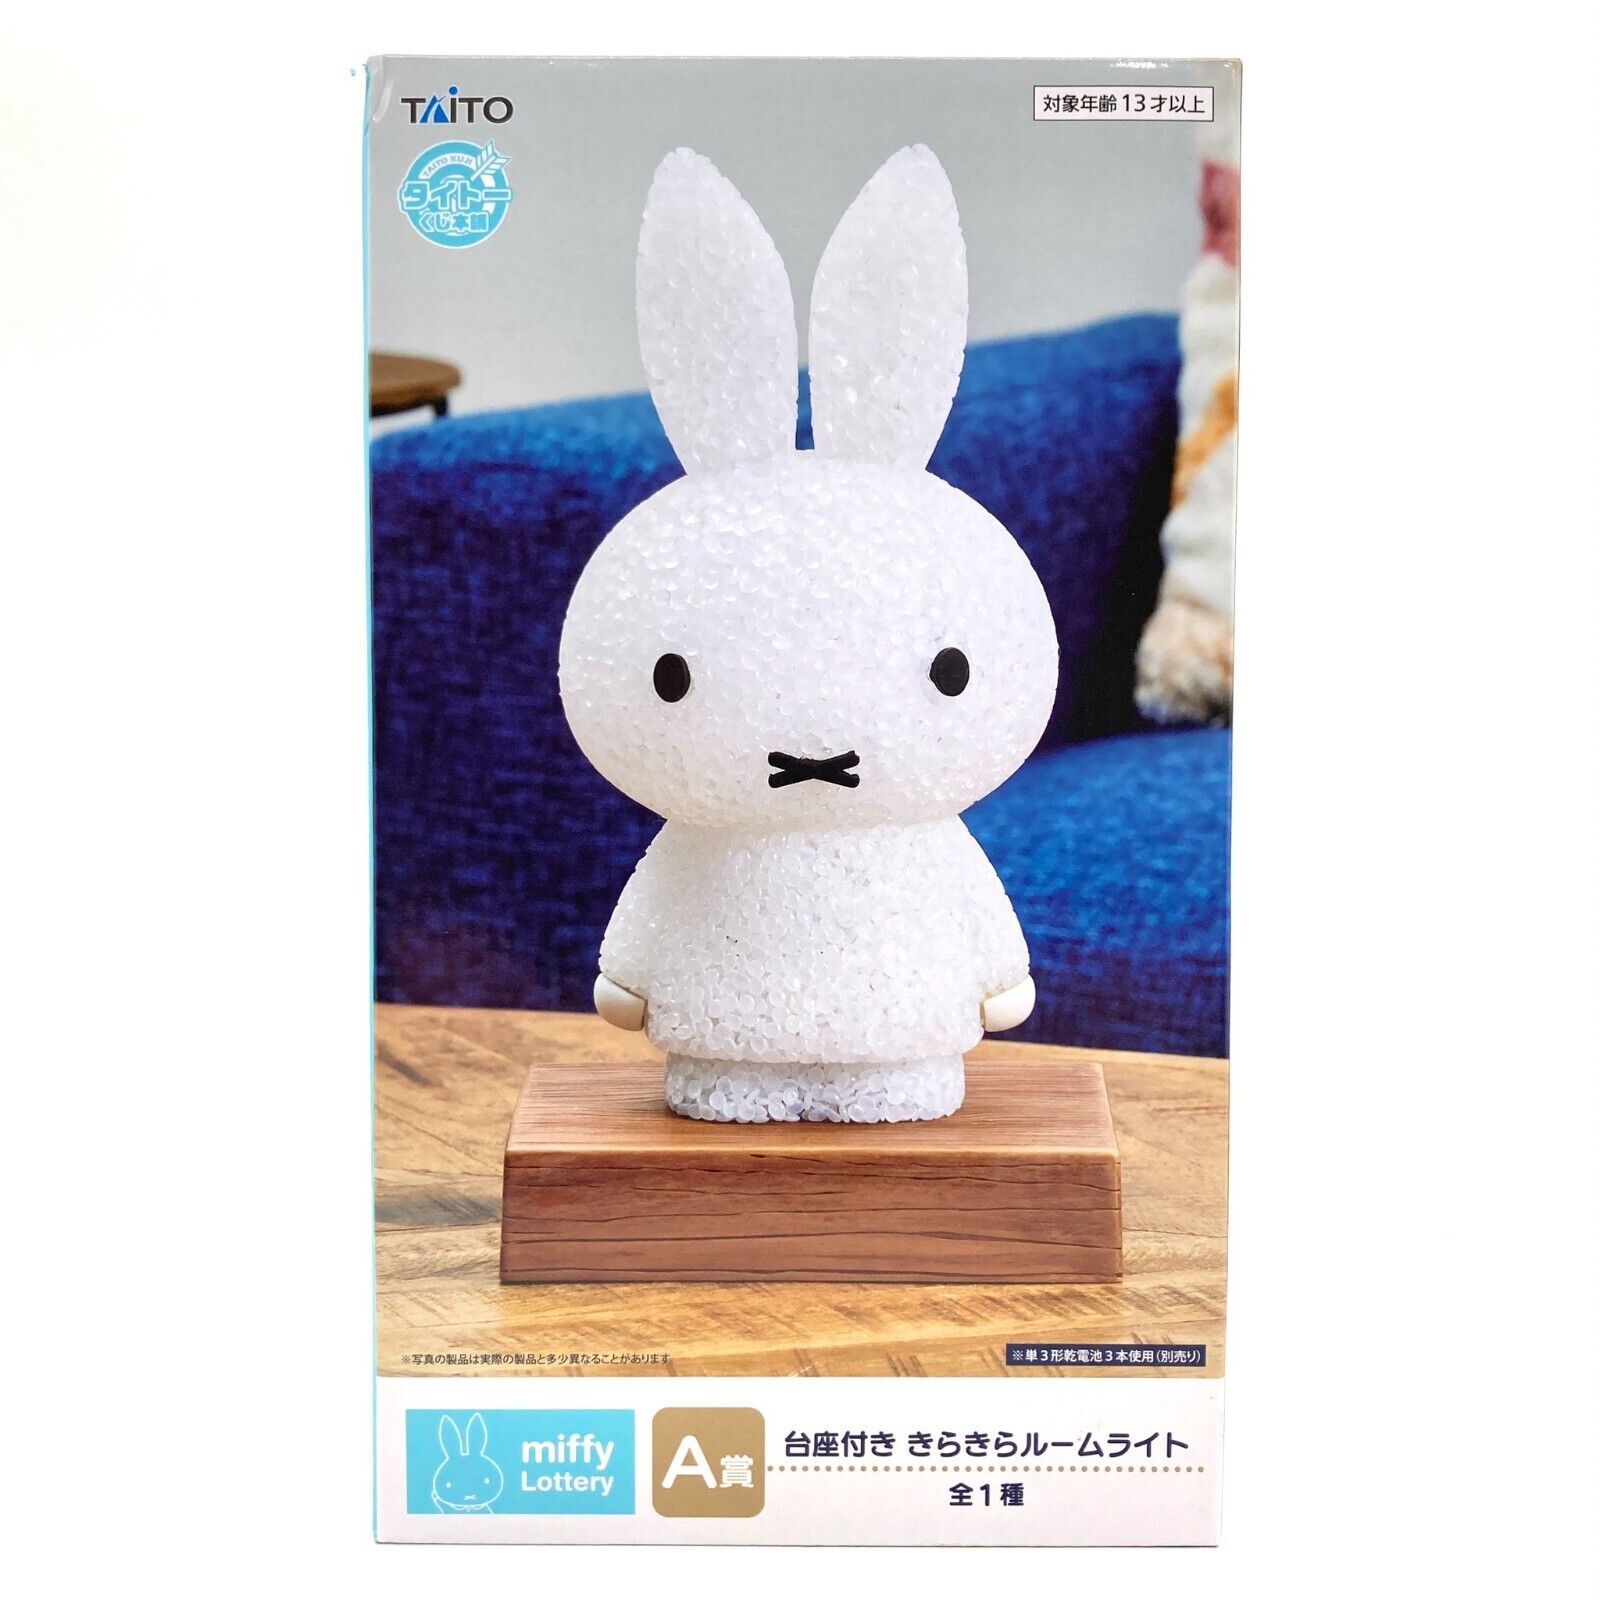 Miffy Lottery Room Light Figure TAiTO A award Rare Japan Cute Gift | eBay